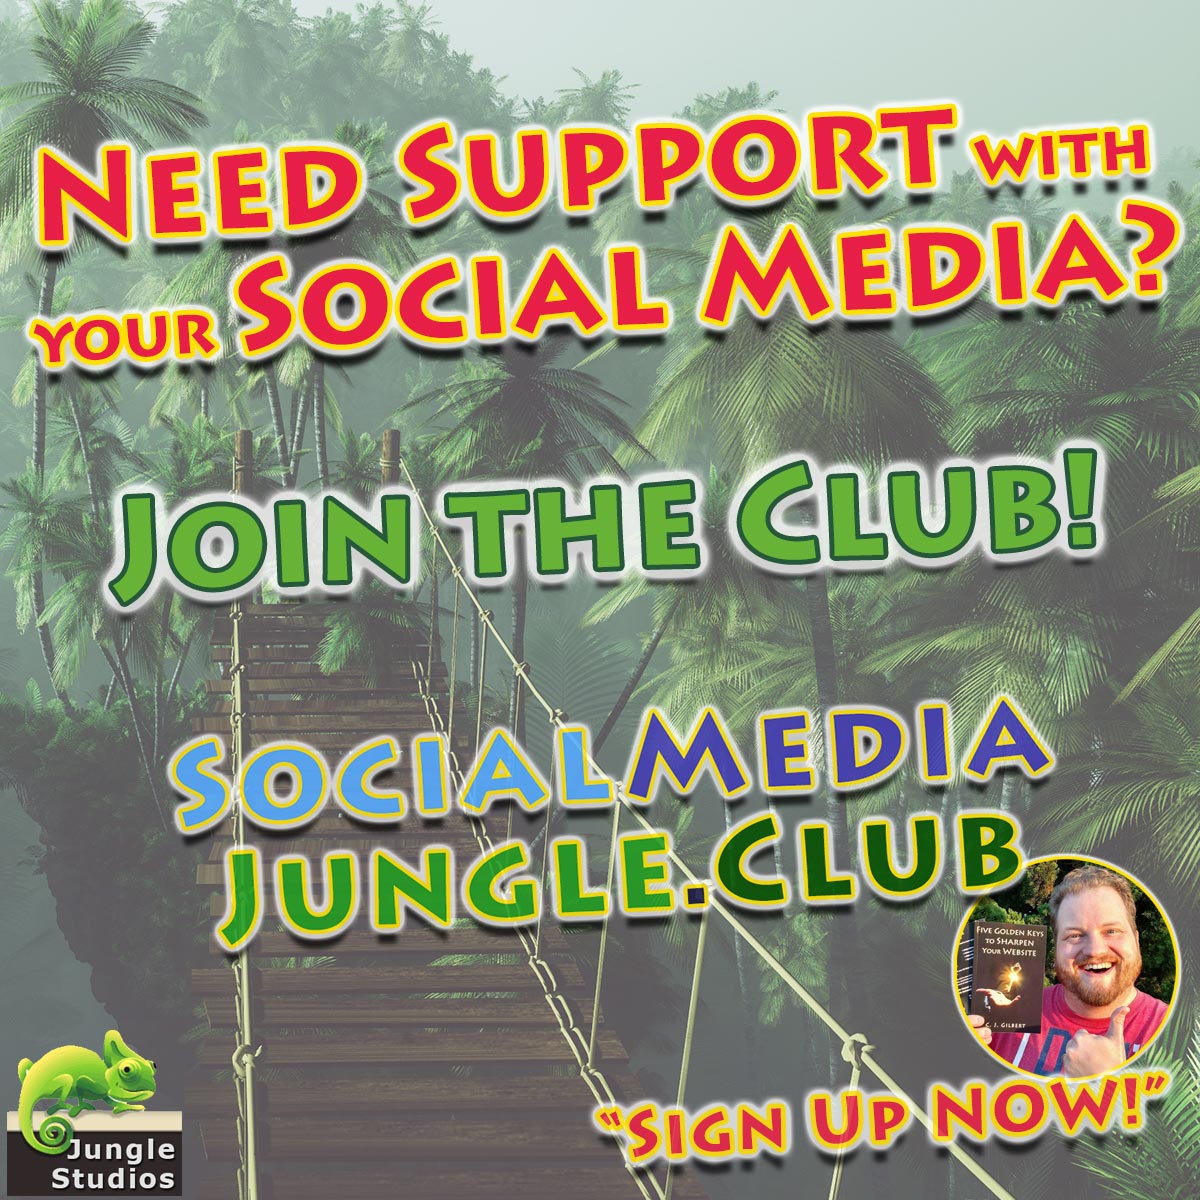 SocialMediaJungle.Club